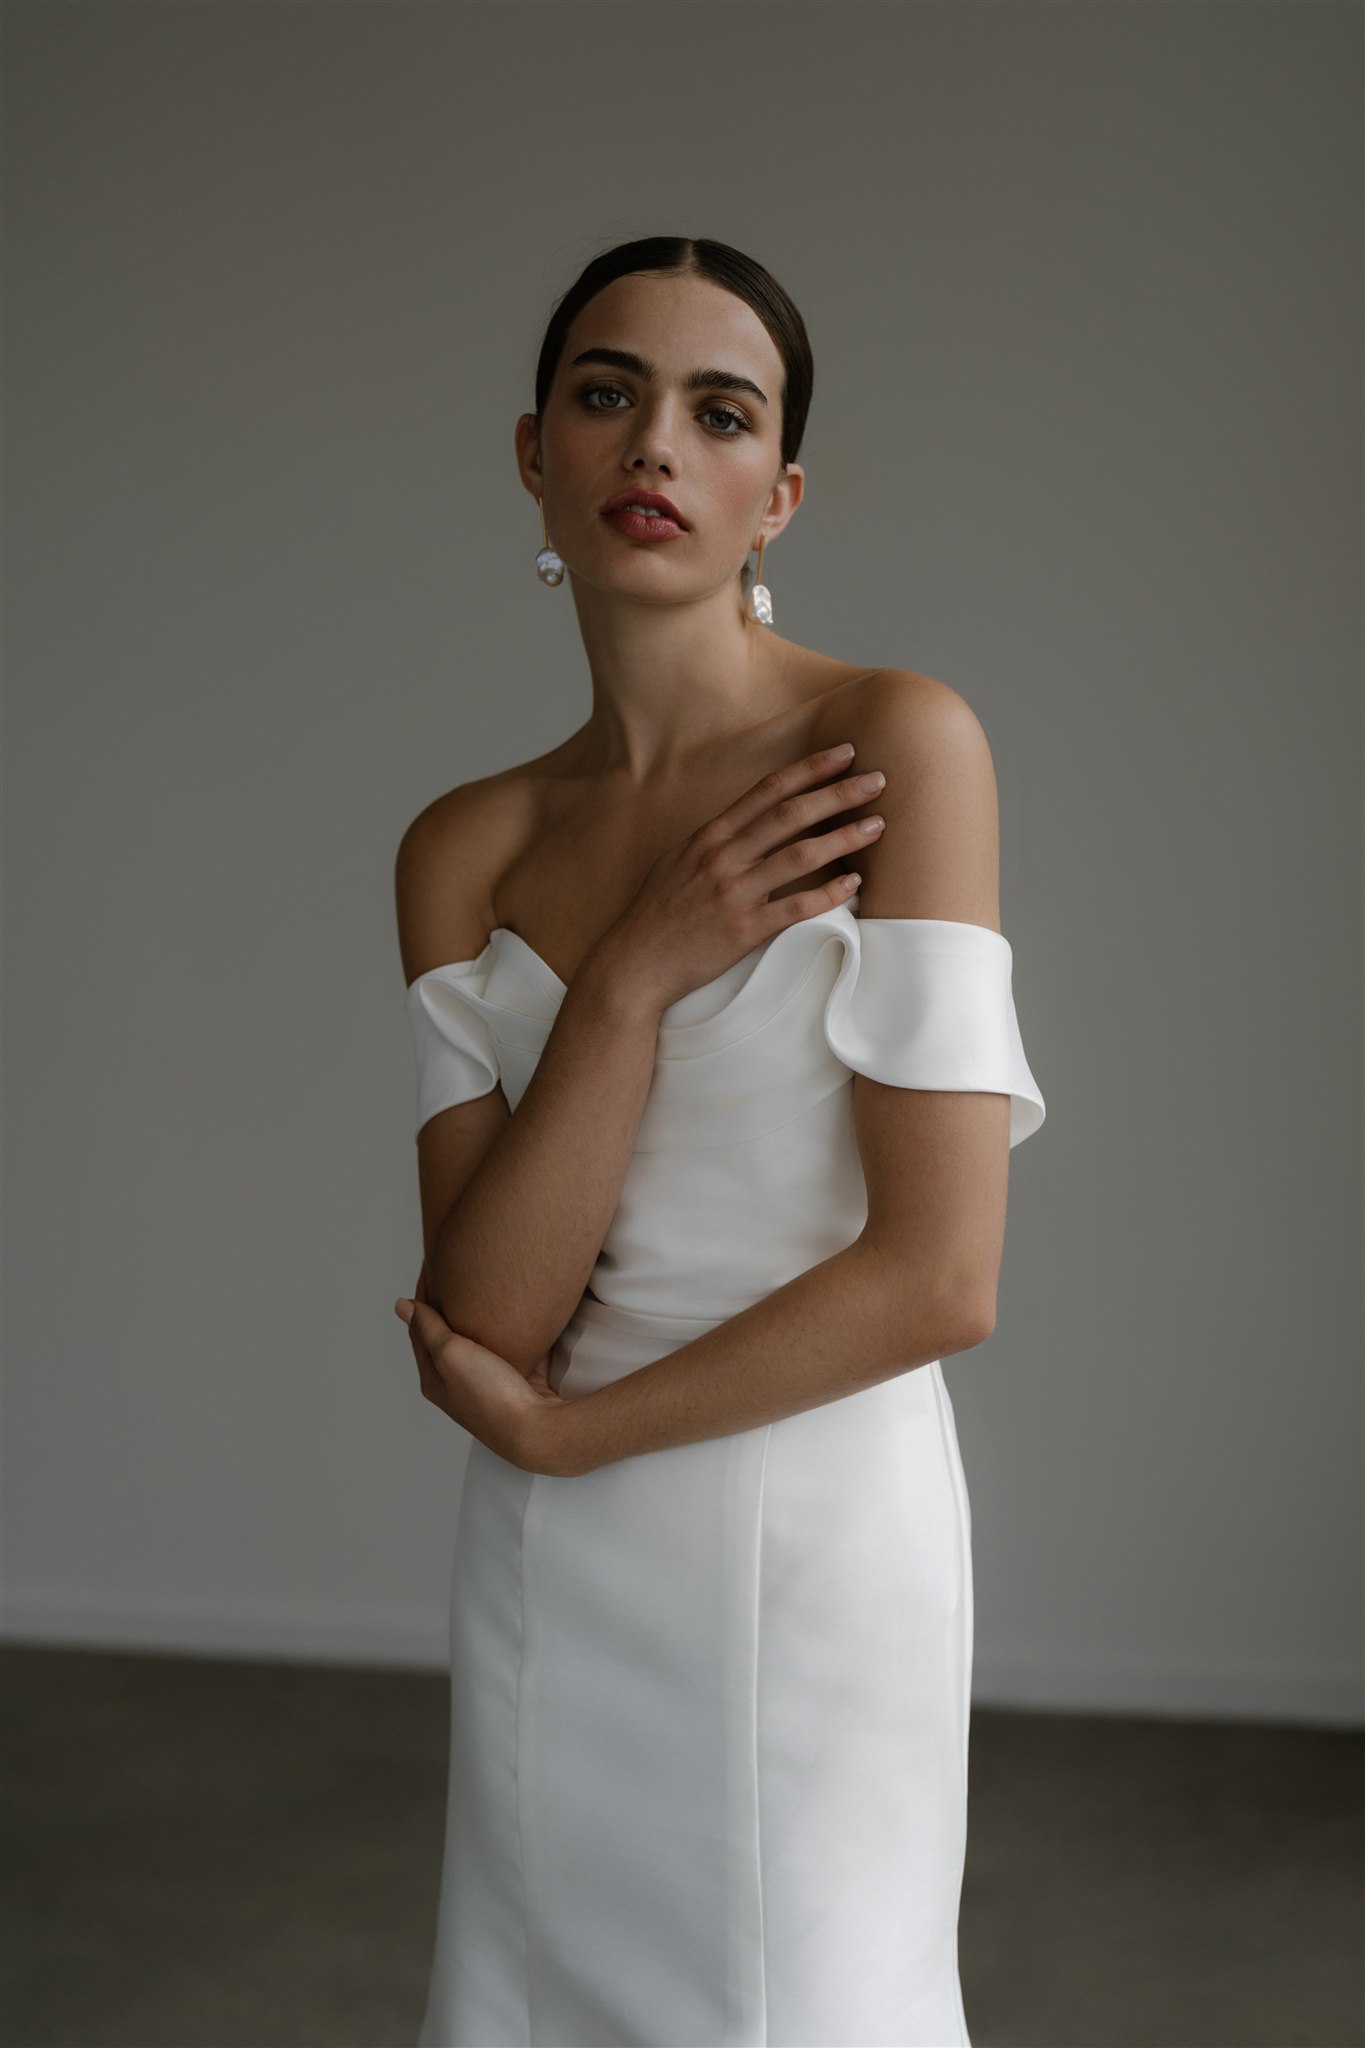 Hera Couture Le Chic Curve New Wedding Dress Save 22% - Stillwhite